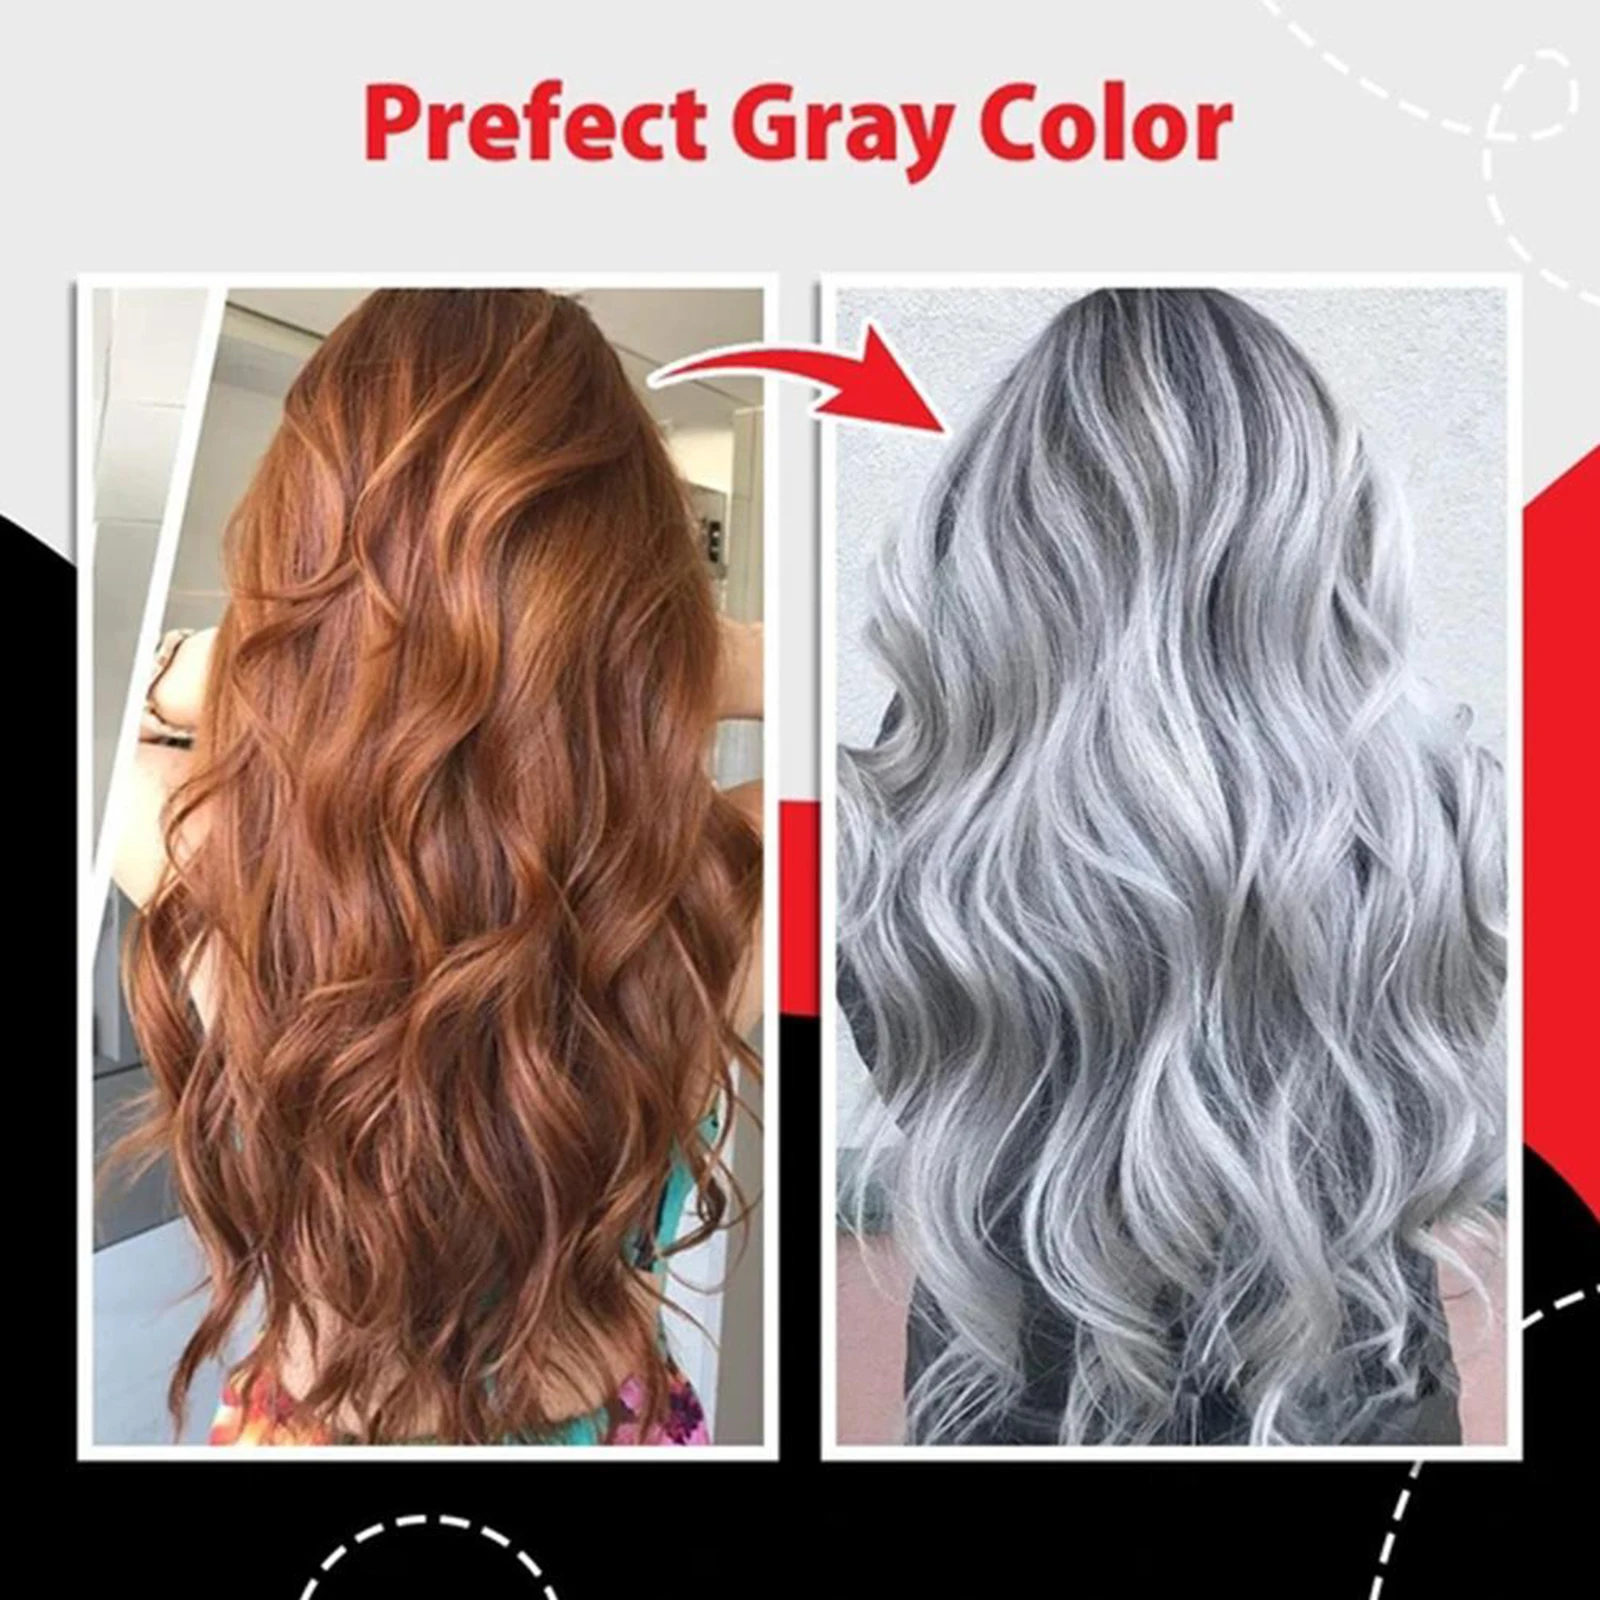 Permanent Hair Color Dye Styling Cream Hairstyle For Party Temporary Hair Dye Blue Black Hair Dye Hair Wax